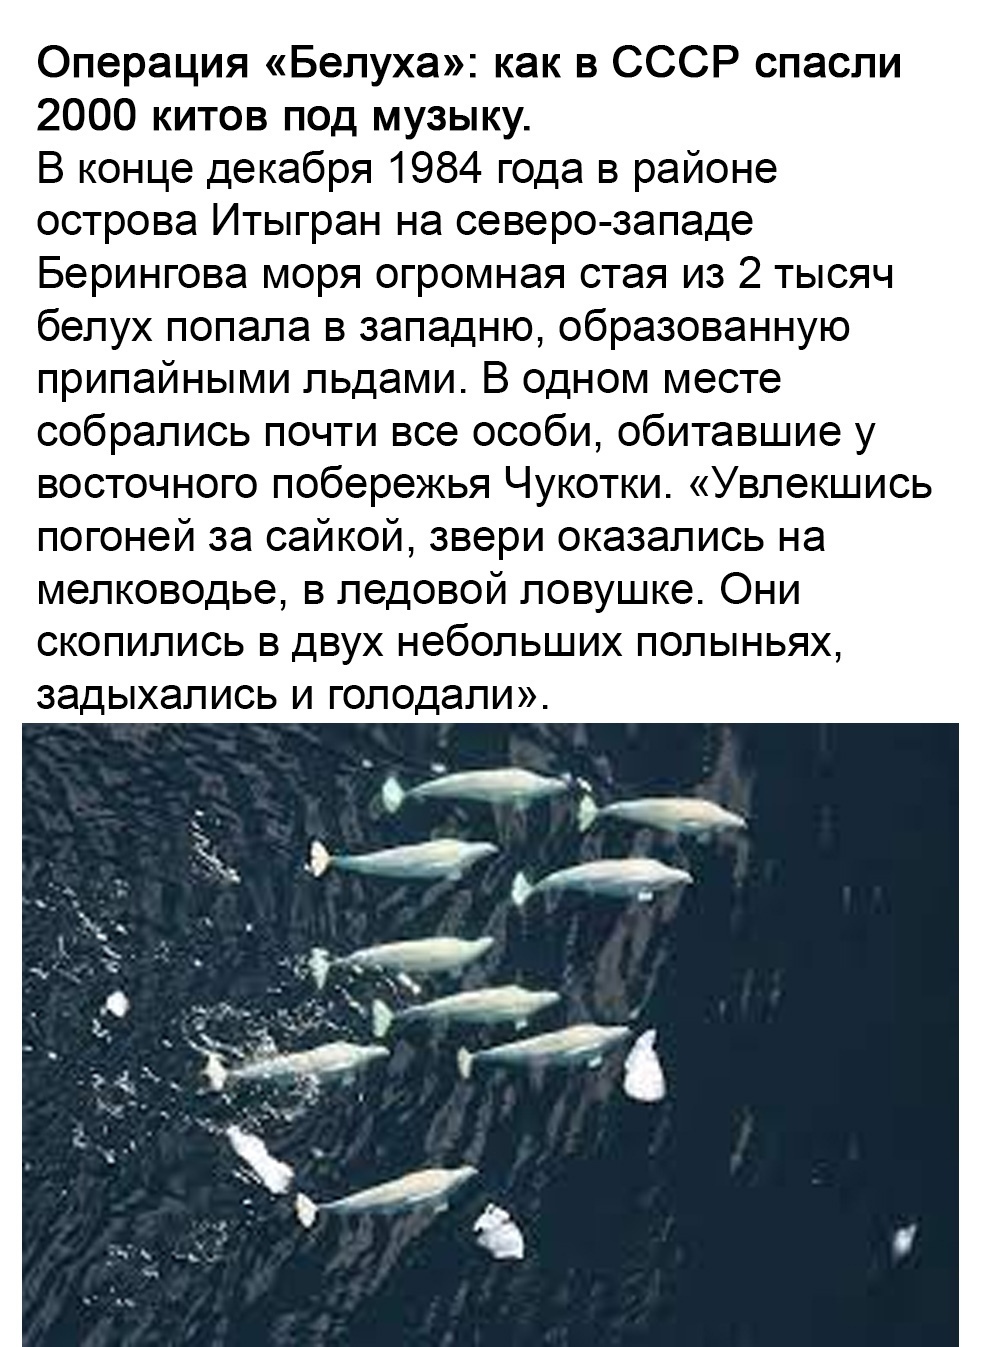 White whales and Pugacheva - Picture with text, Longpost, Chukotka, Alla Pugacheva, Animal Rescue, Positive, Beluga whales